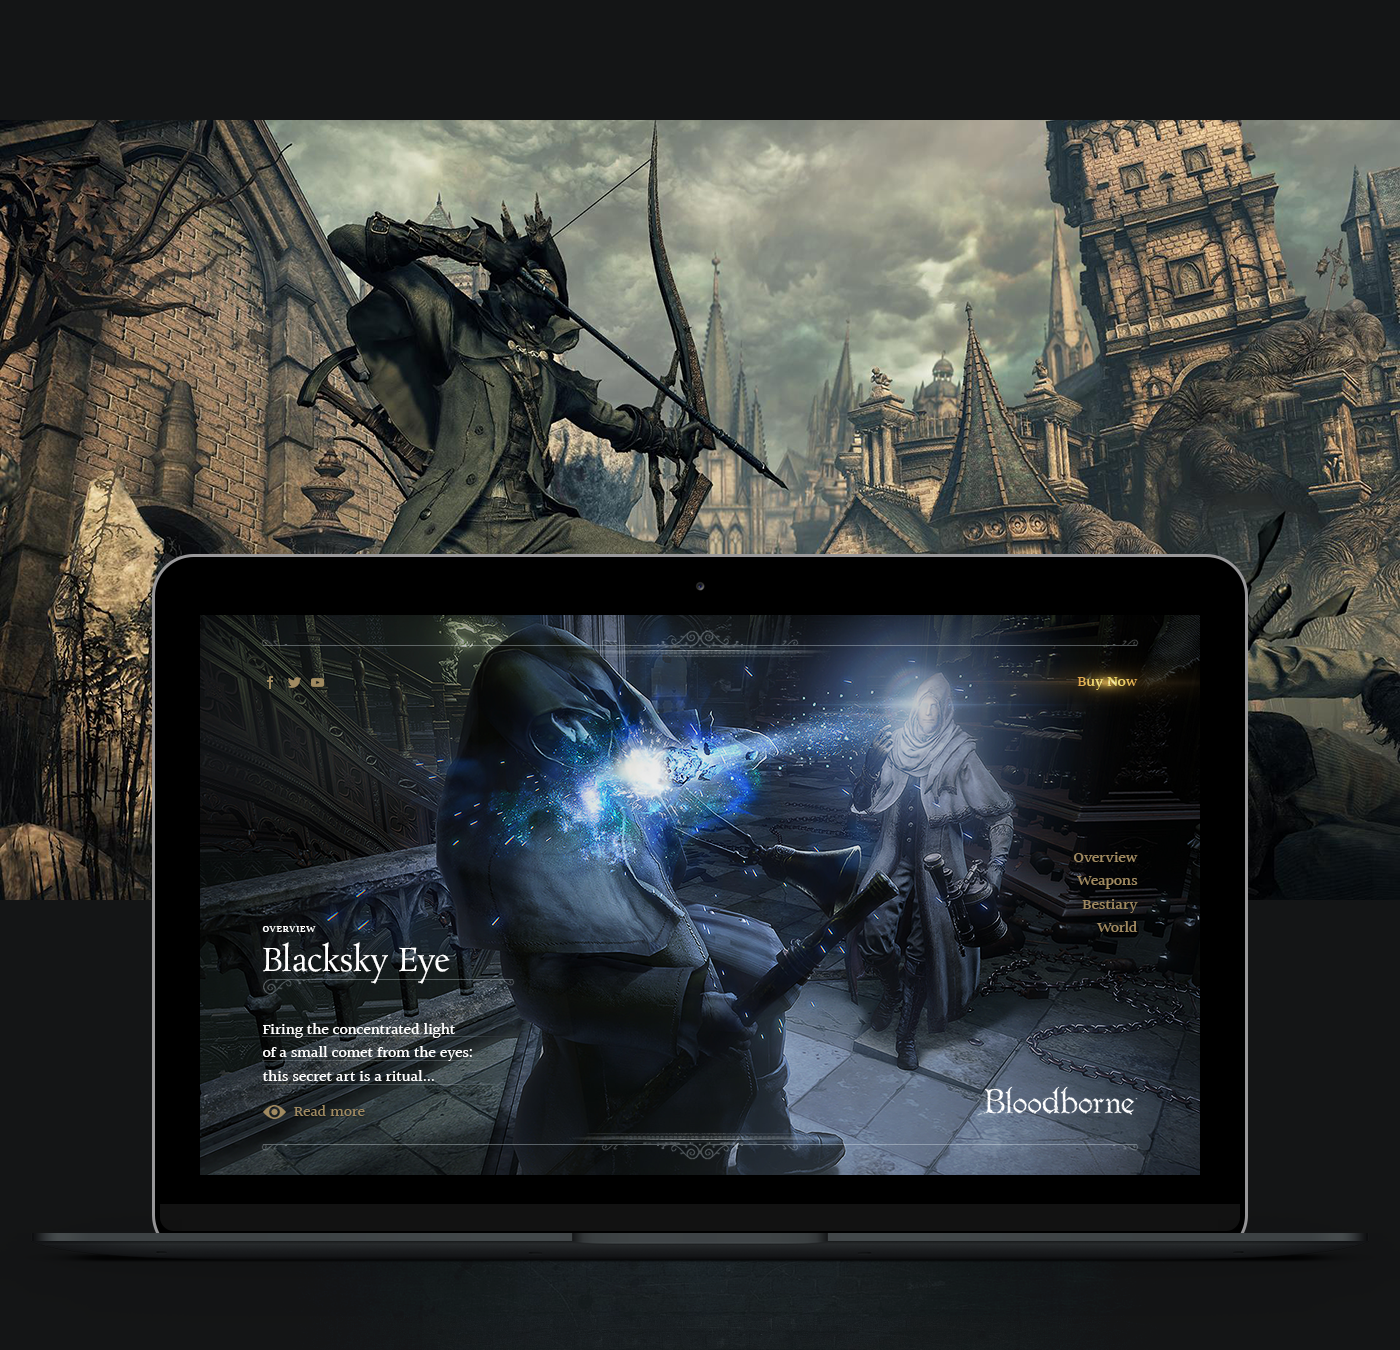 Bloodborne playstation 4 FromSoftware Sony Web Website Webdesign Layout inspire hunter nightmare yharnam beast blood hellowiktor